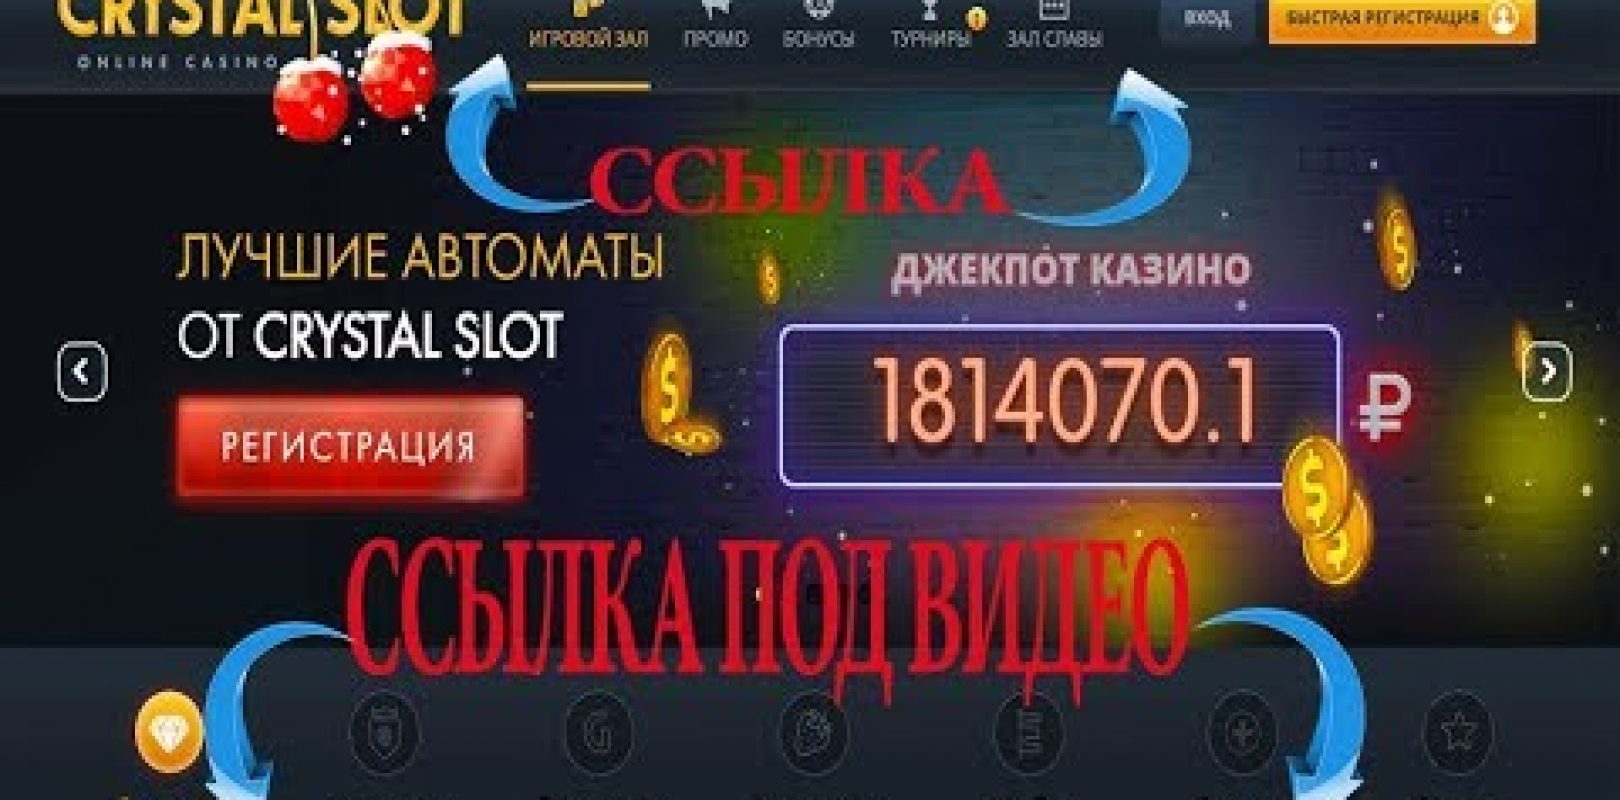 Juwa 777 online casino download